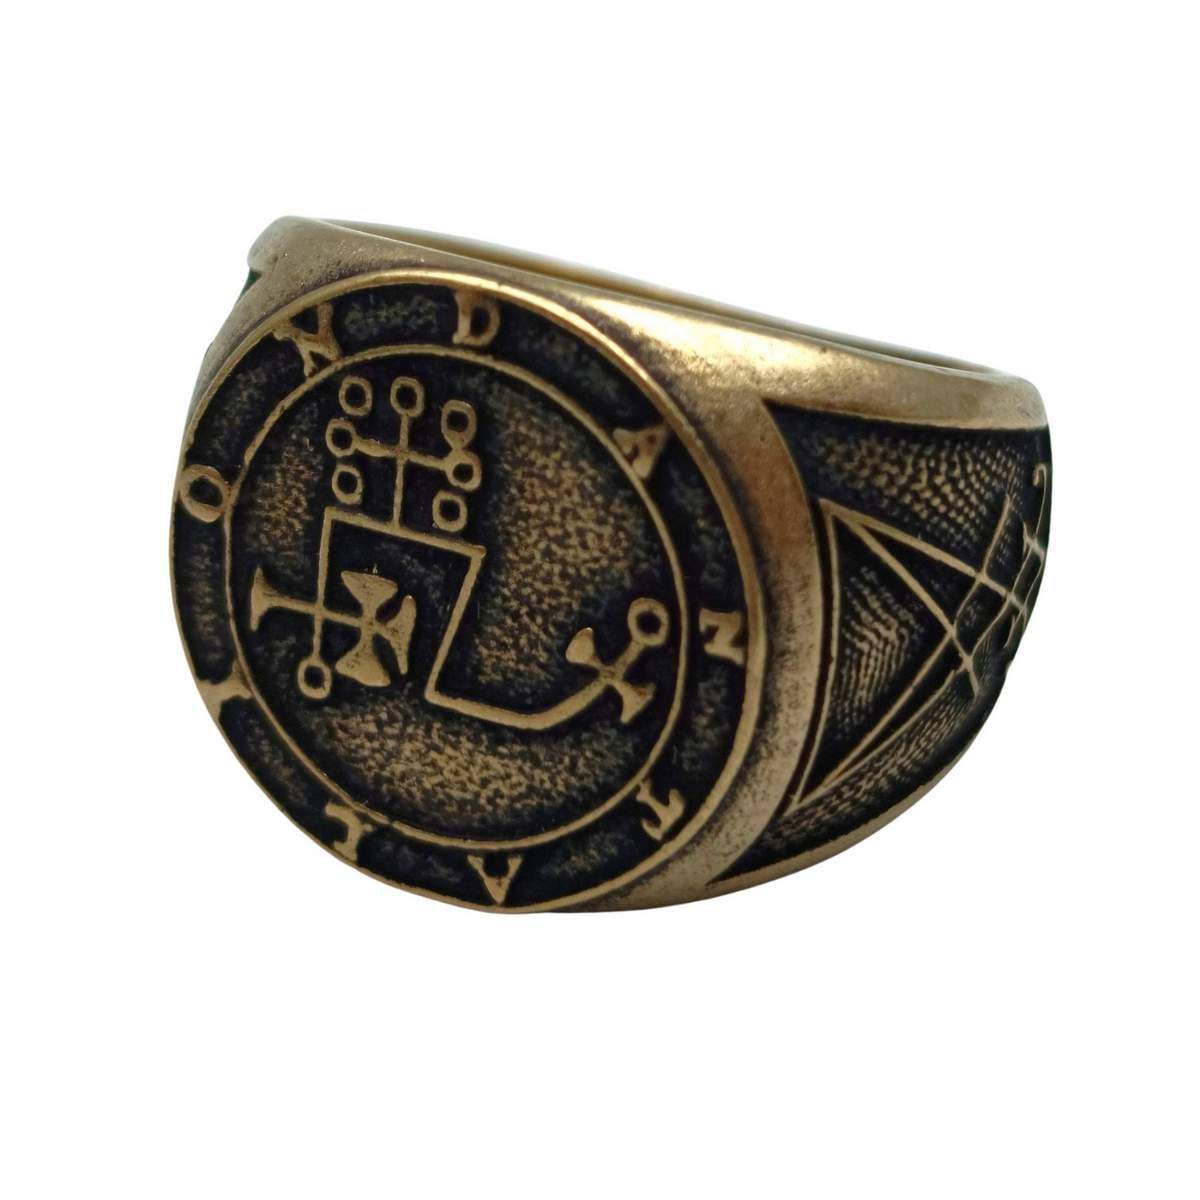 Dantalion sigil ring from bronze